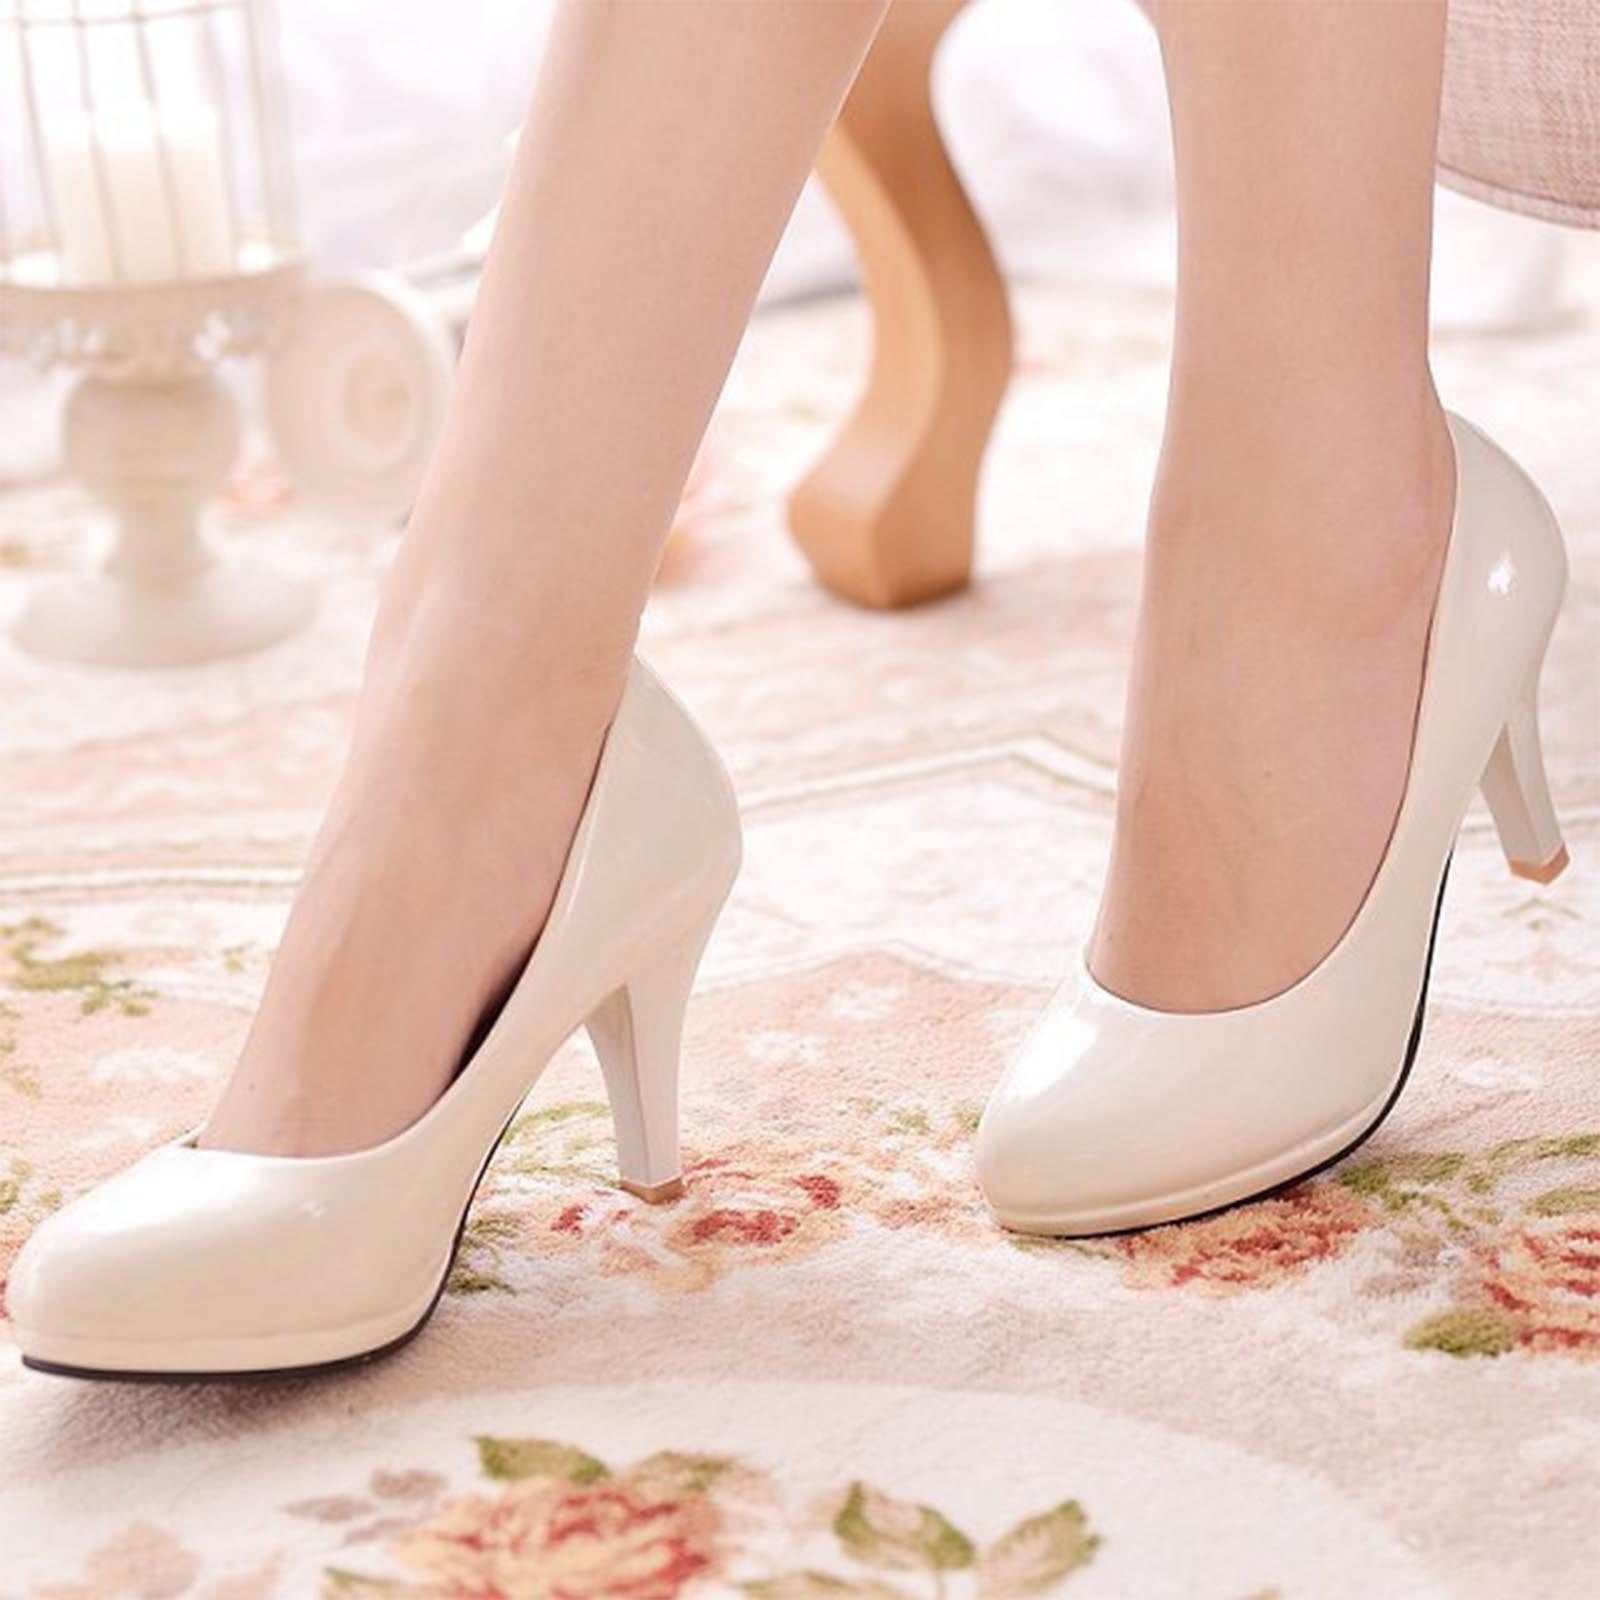 Size 2 Sandal Heels - Buy Size 2 Sandal Heels online in India